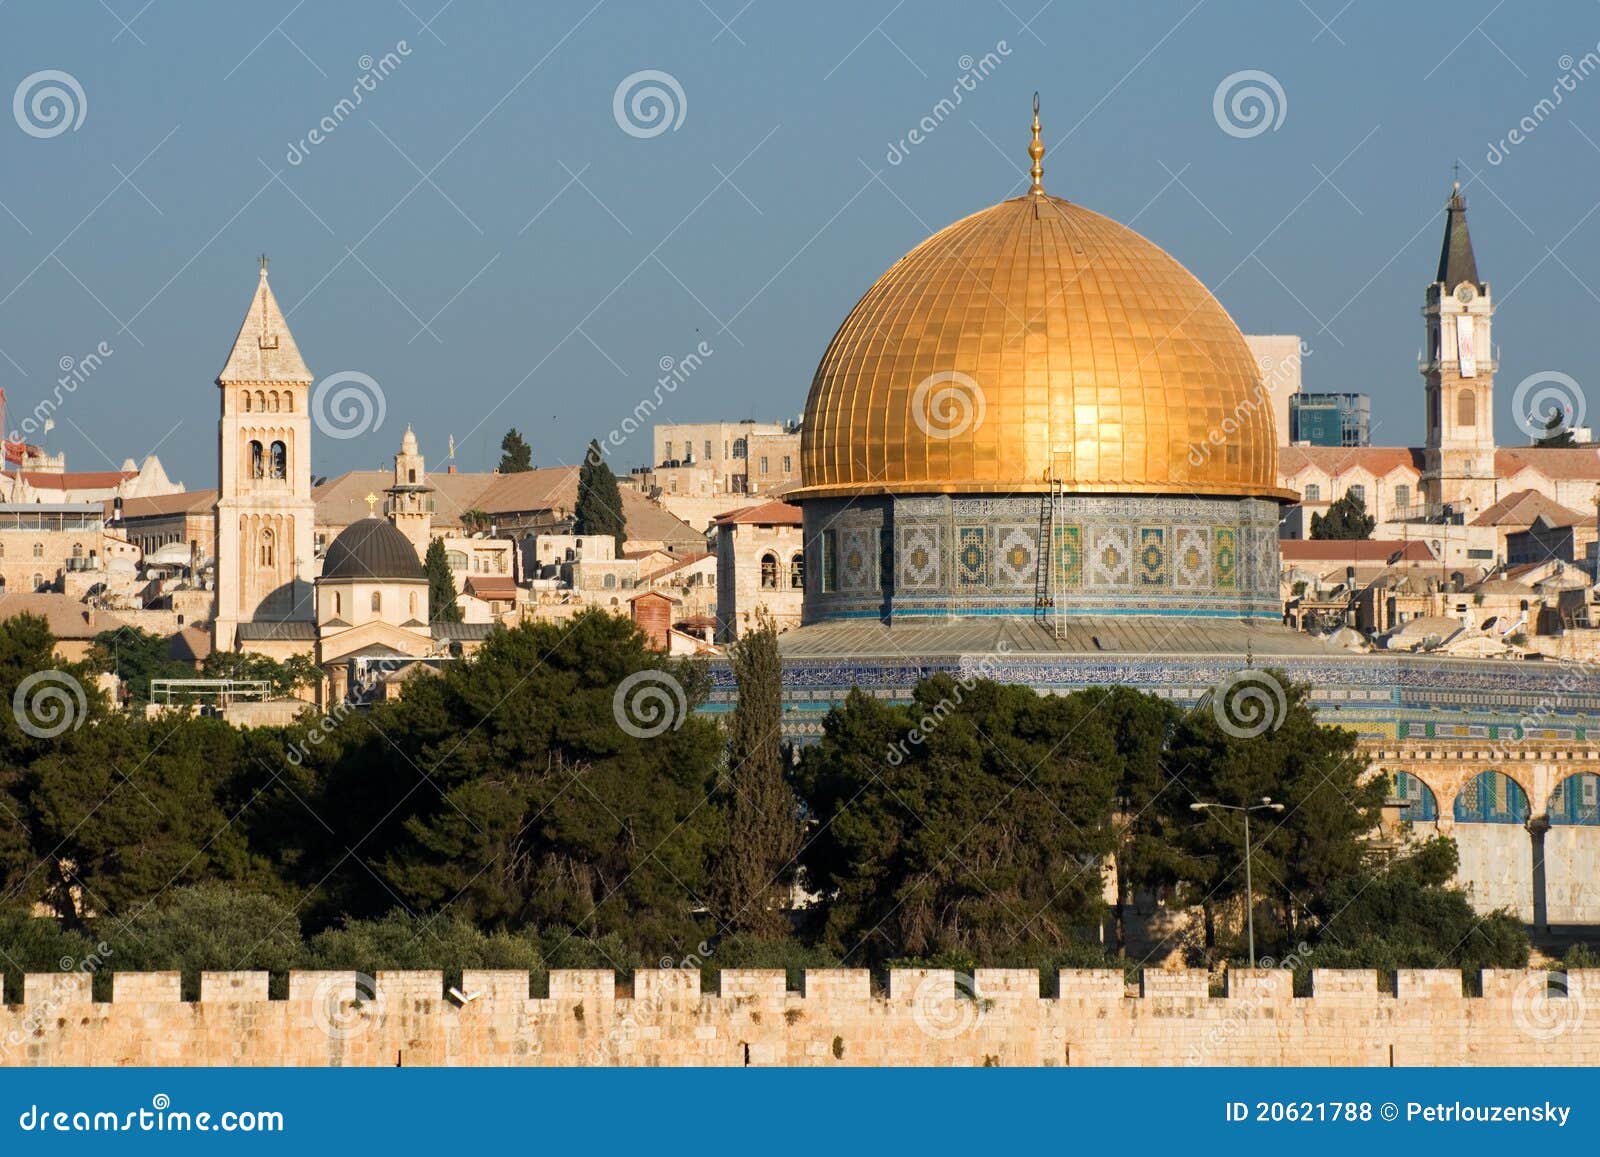 old jerusalem, israel - dome of the rock